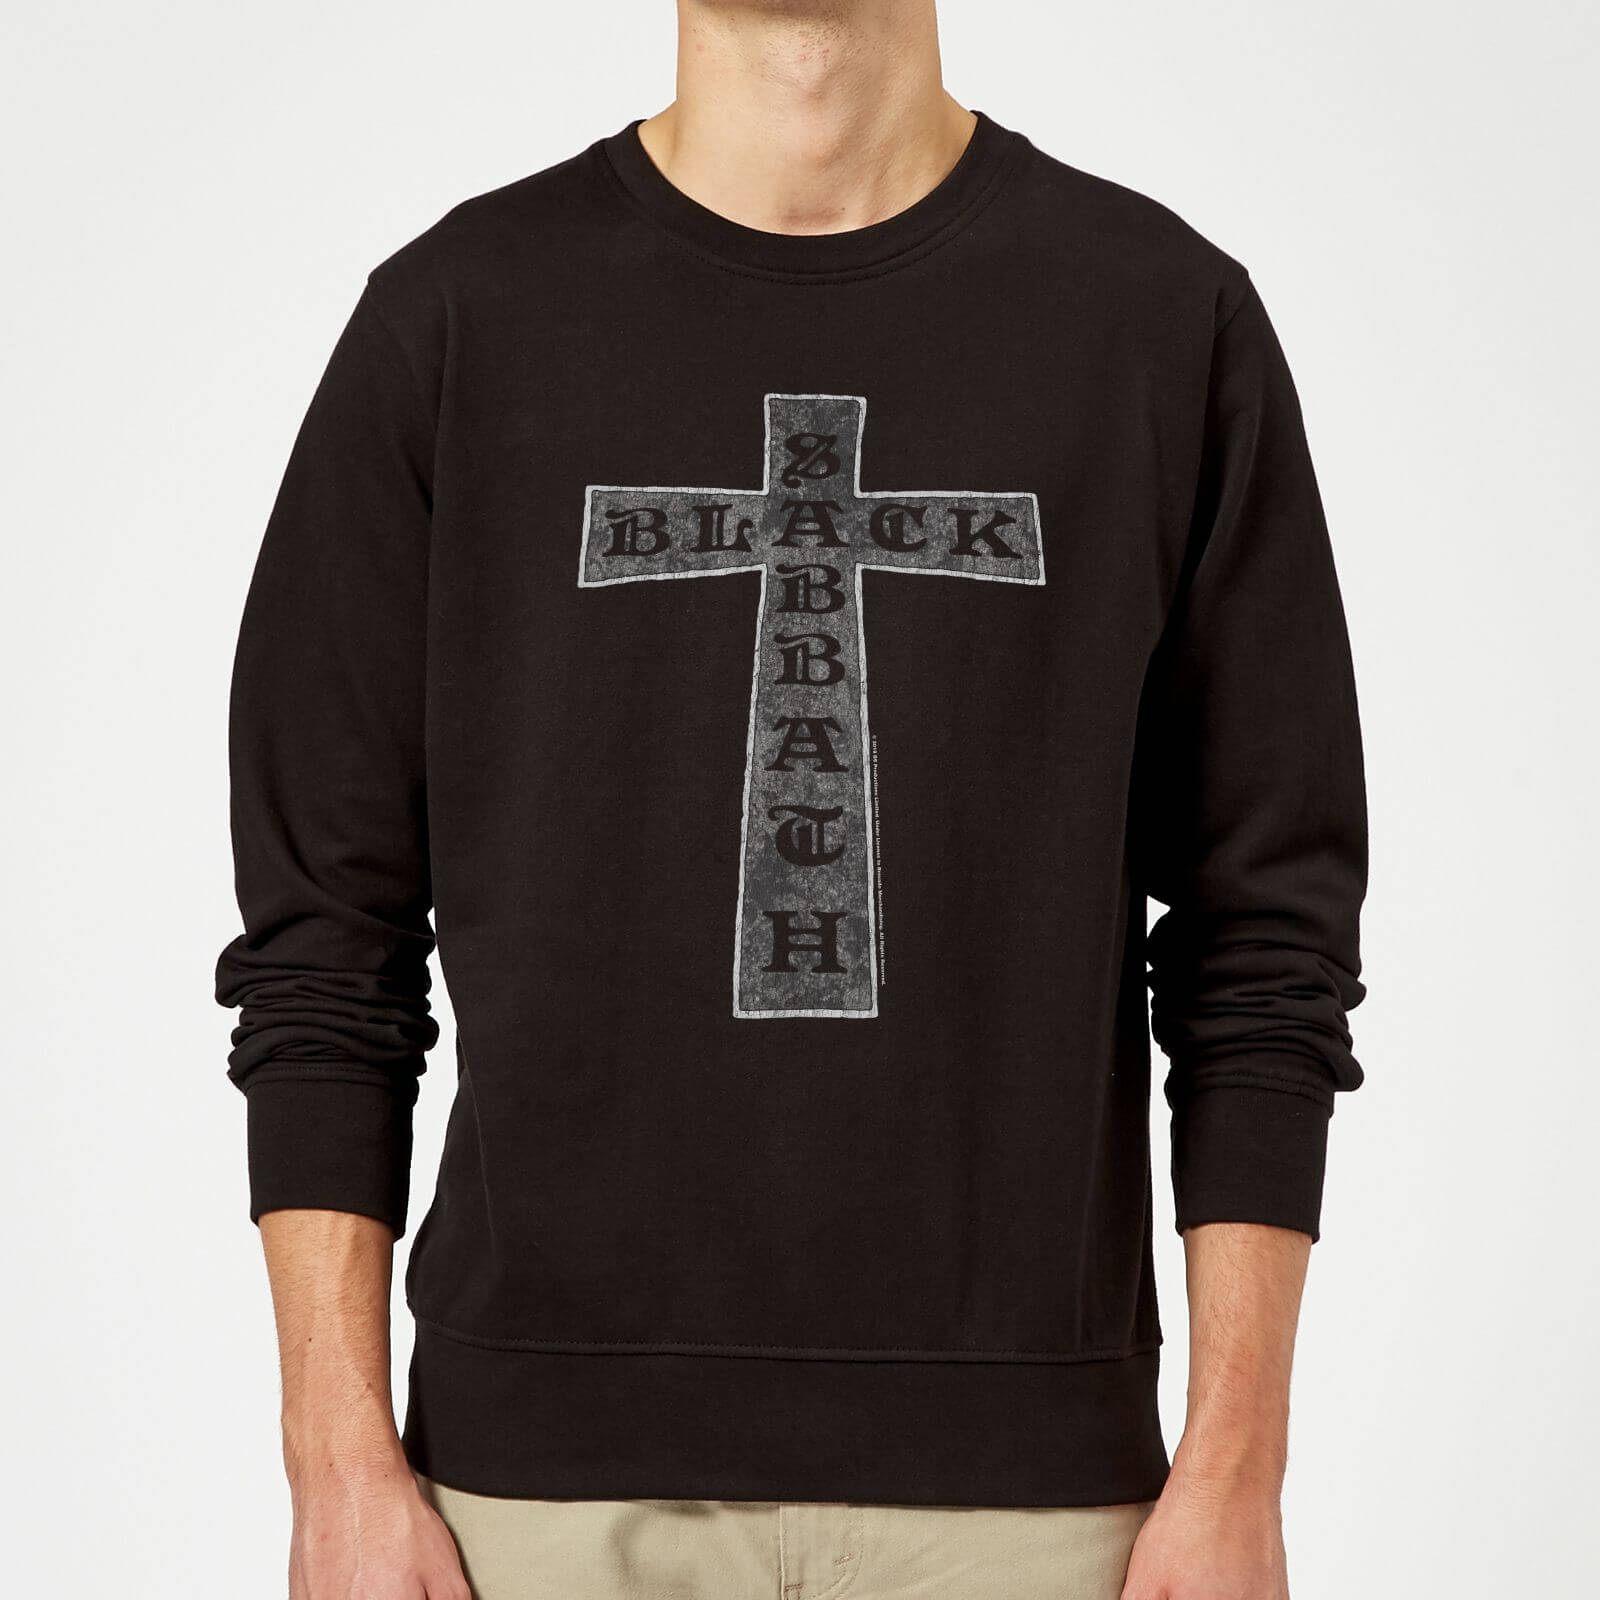 Black Sabbath Cross Sweatshirt - Schwarz - M